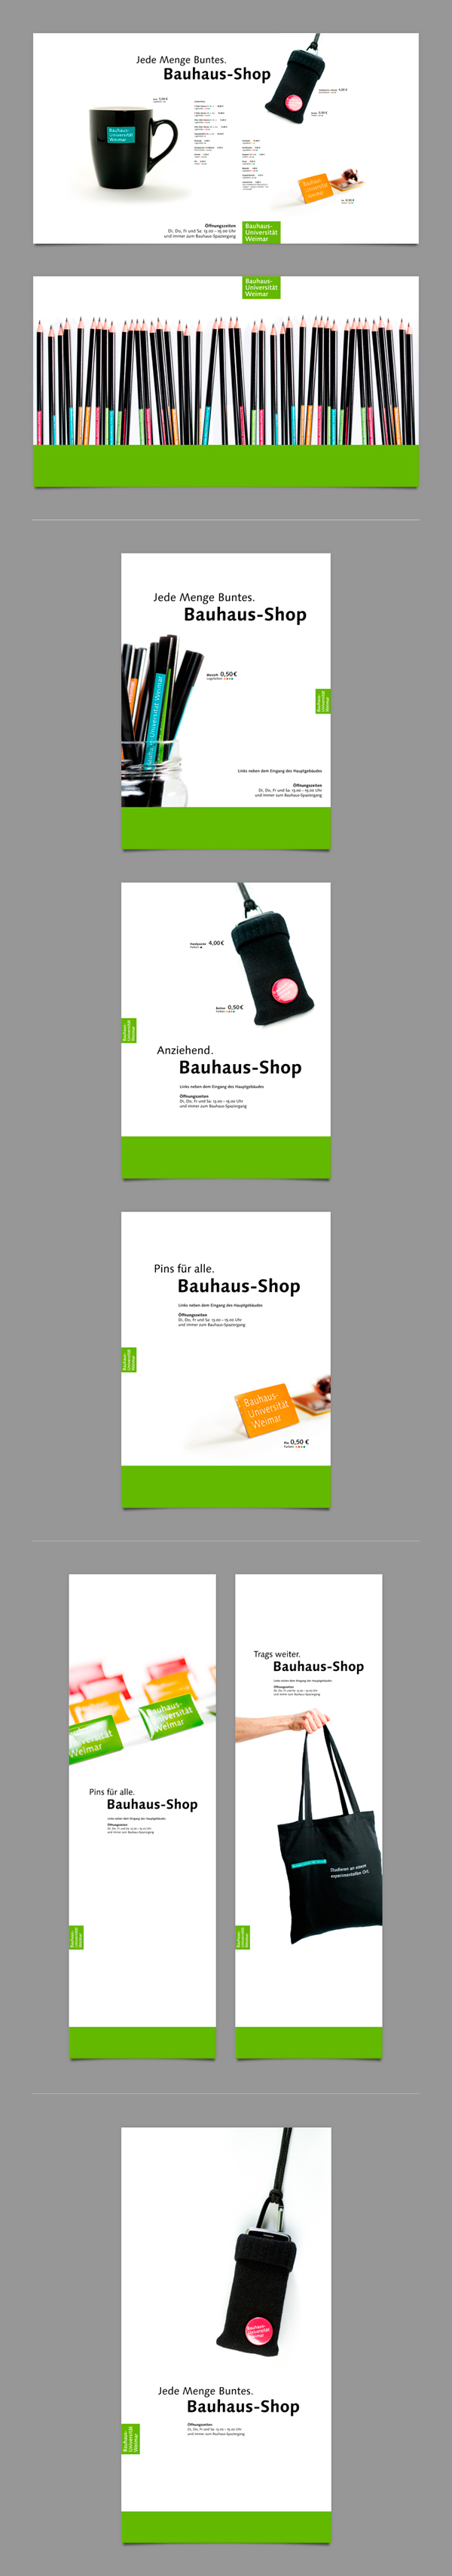 Bauhaus-Shop